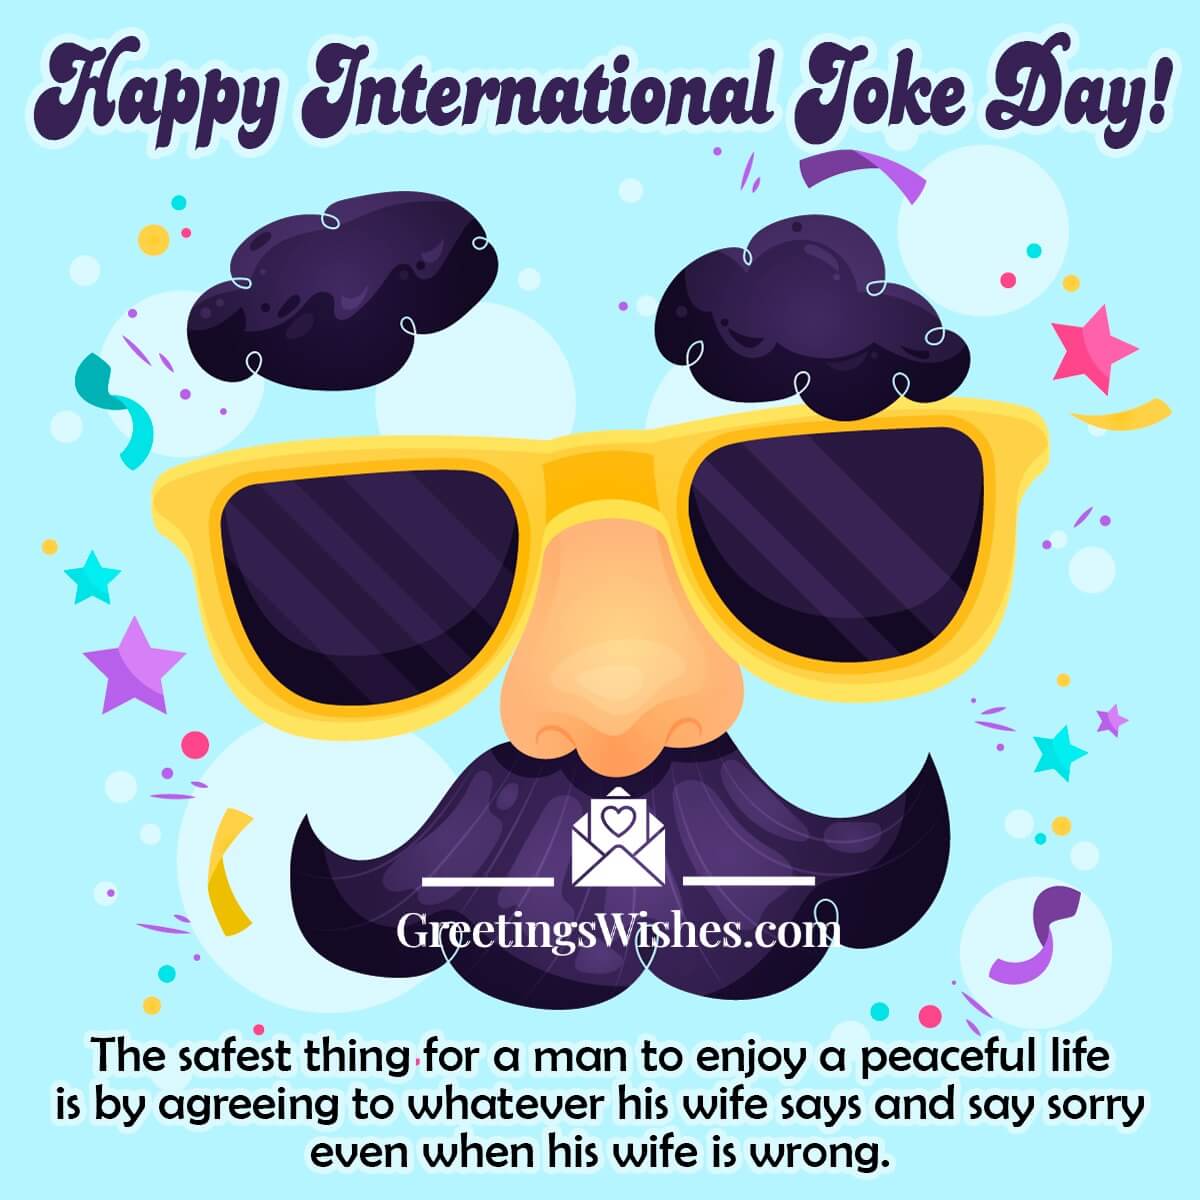 Happy International Joke Day